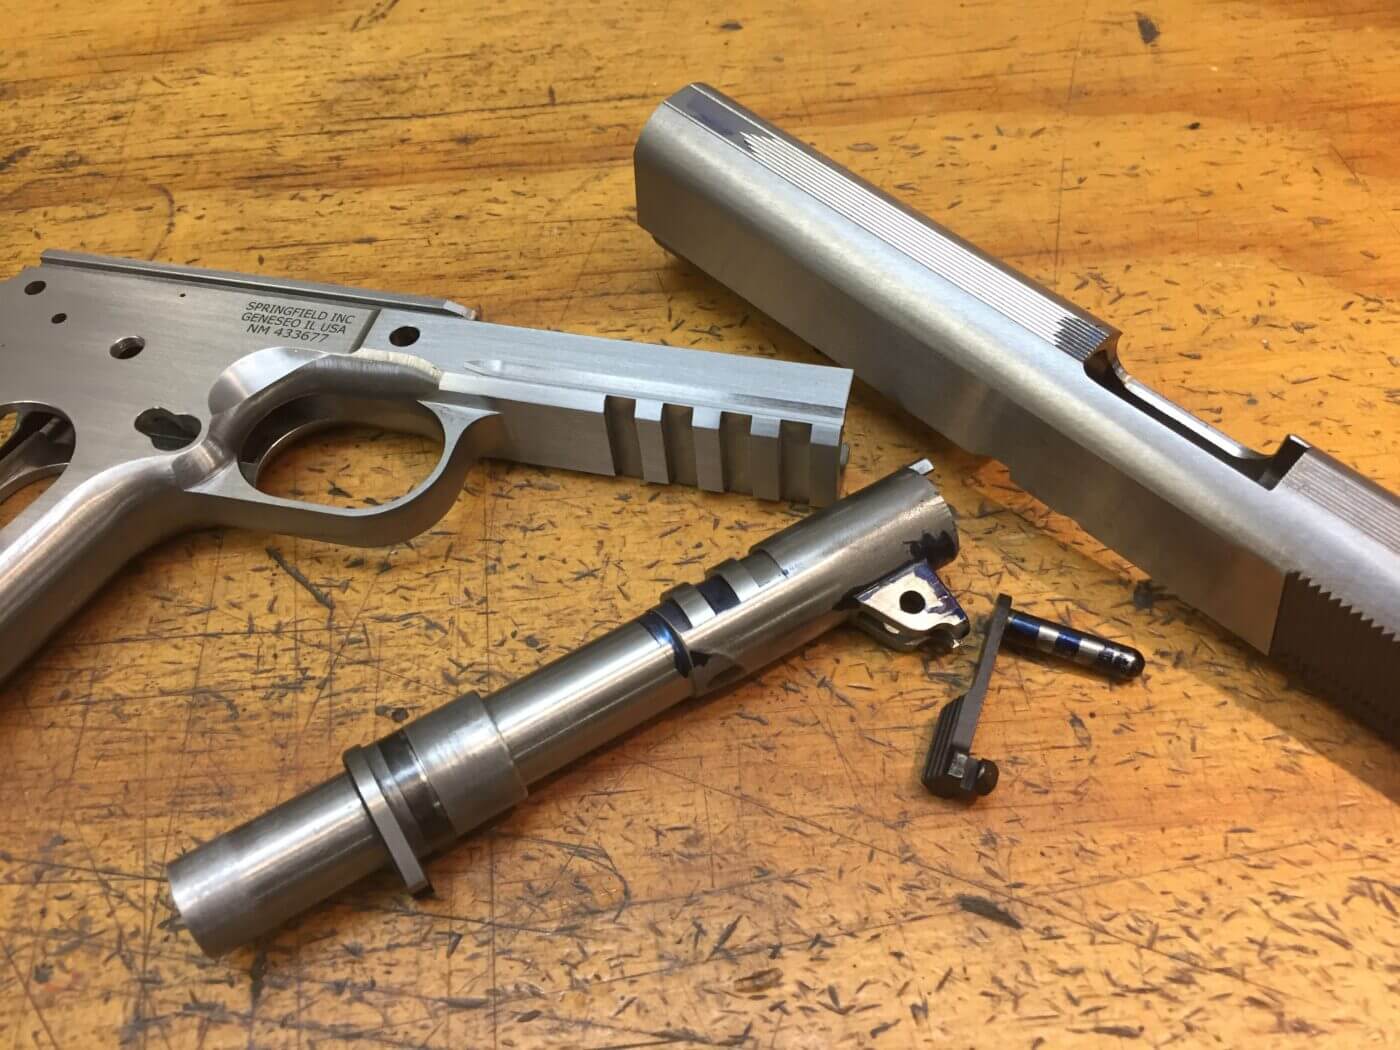 Custom parts for a 1911 pistol